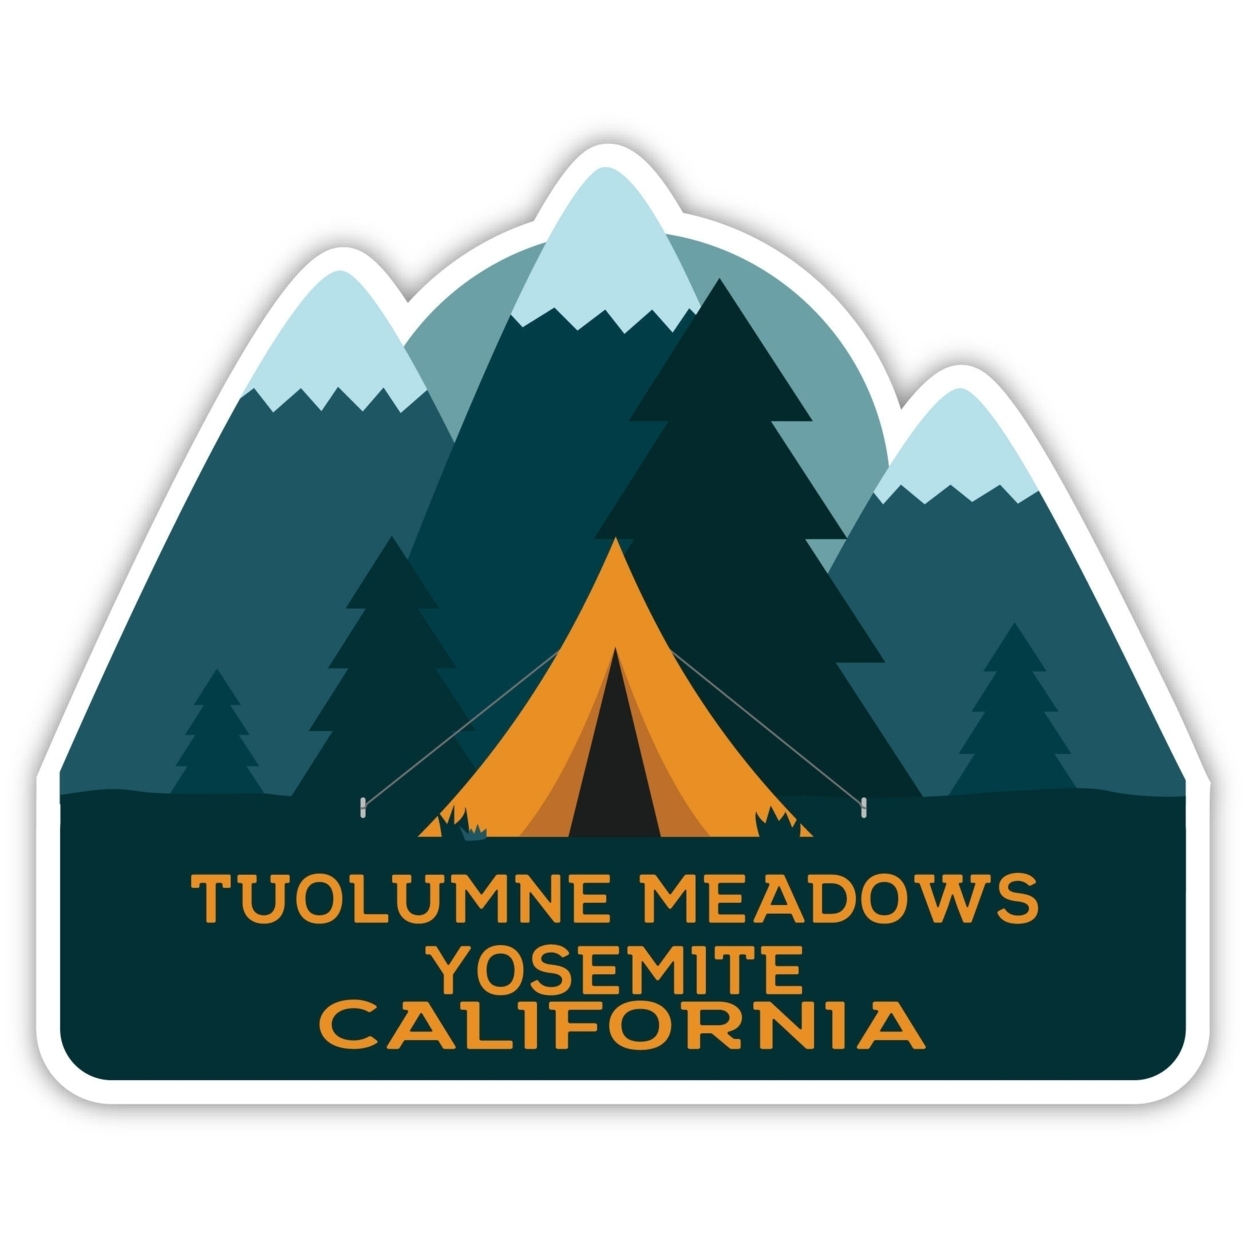 Tuolumne Meadows Yosemite California Souvenir Decorative Stickers (Choose Theme And Size) - Single Unit, 2-Inch, Camp Life